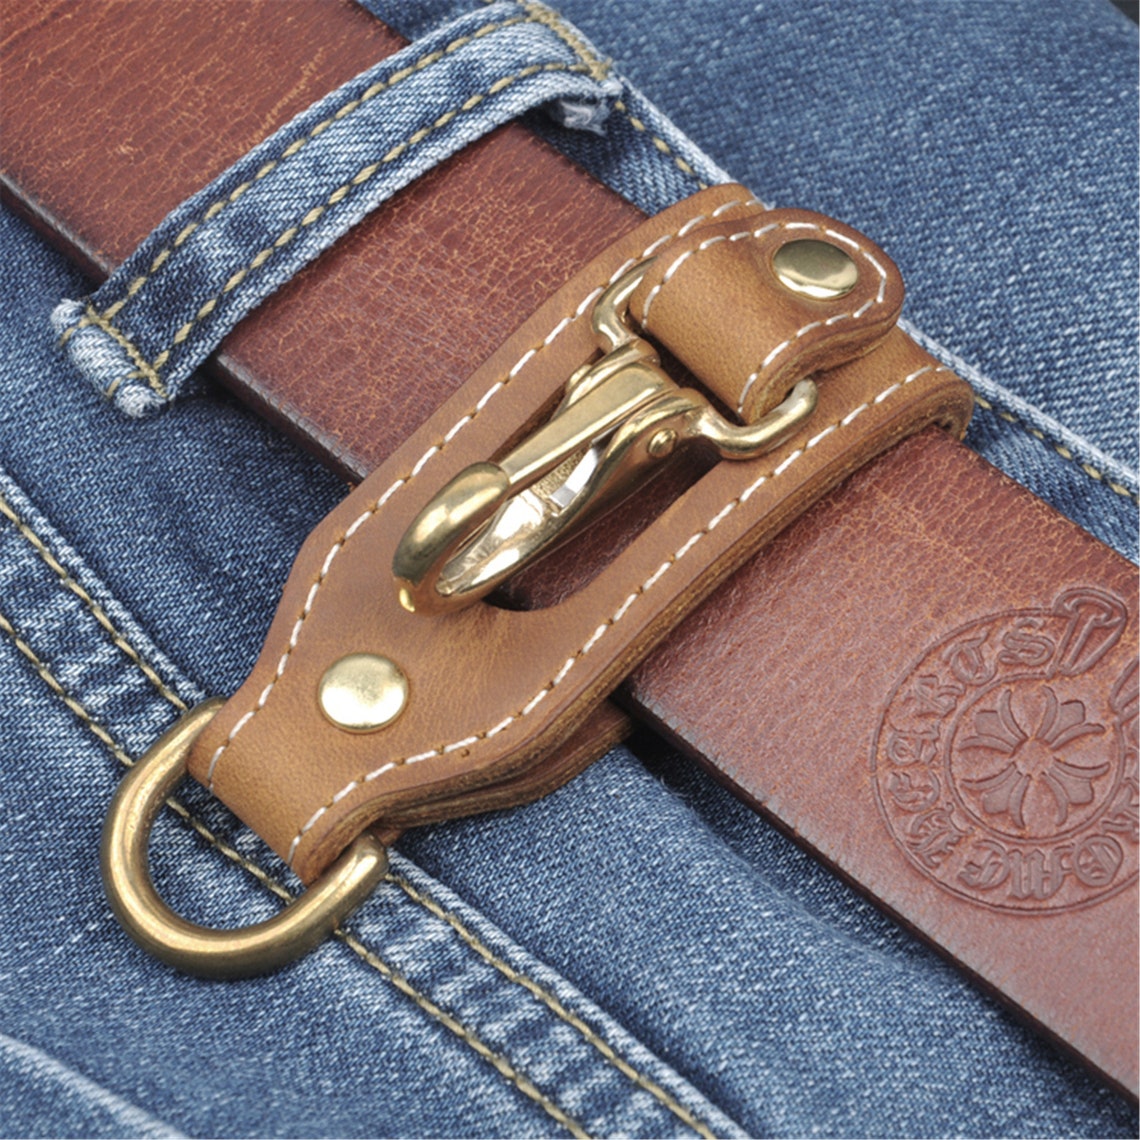 Leather belt brass key clip holder Key Fob | Etsy